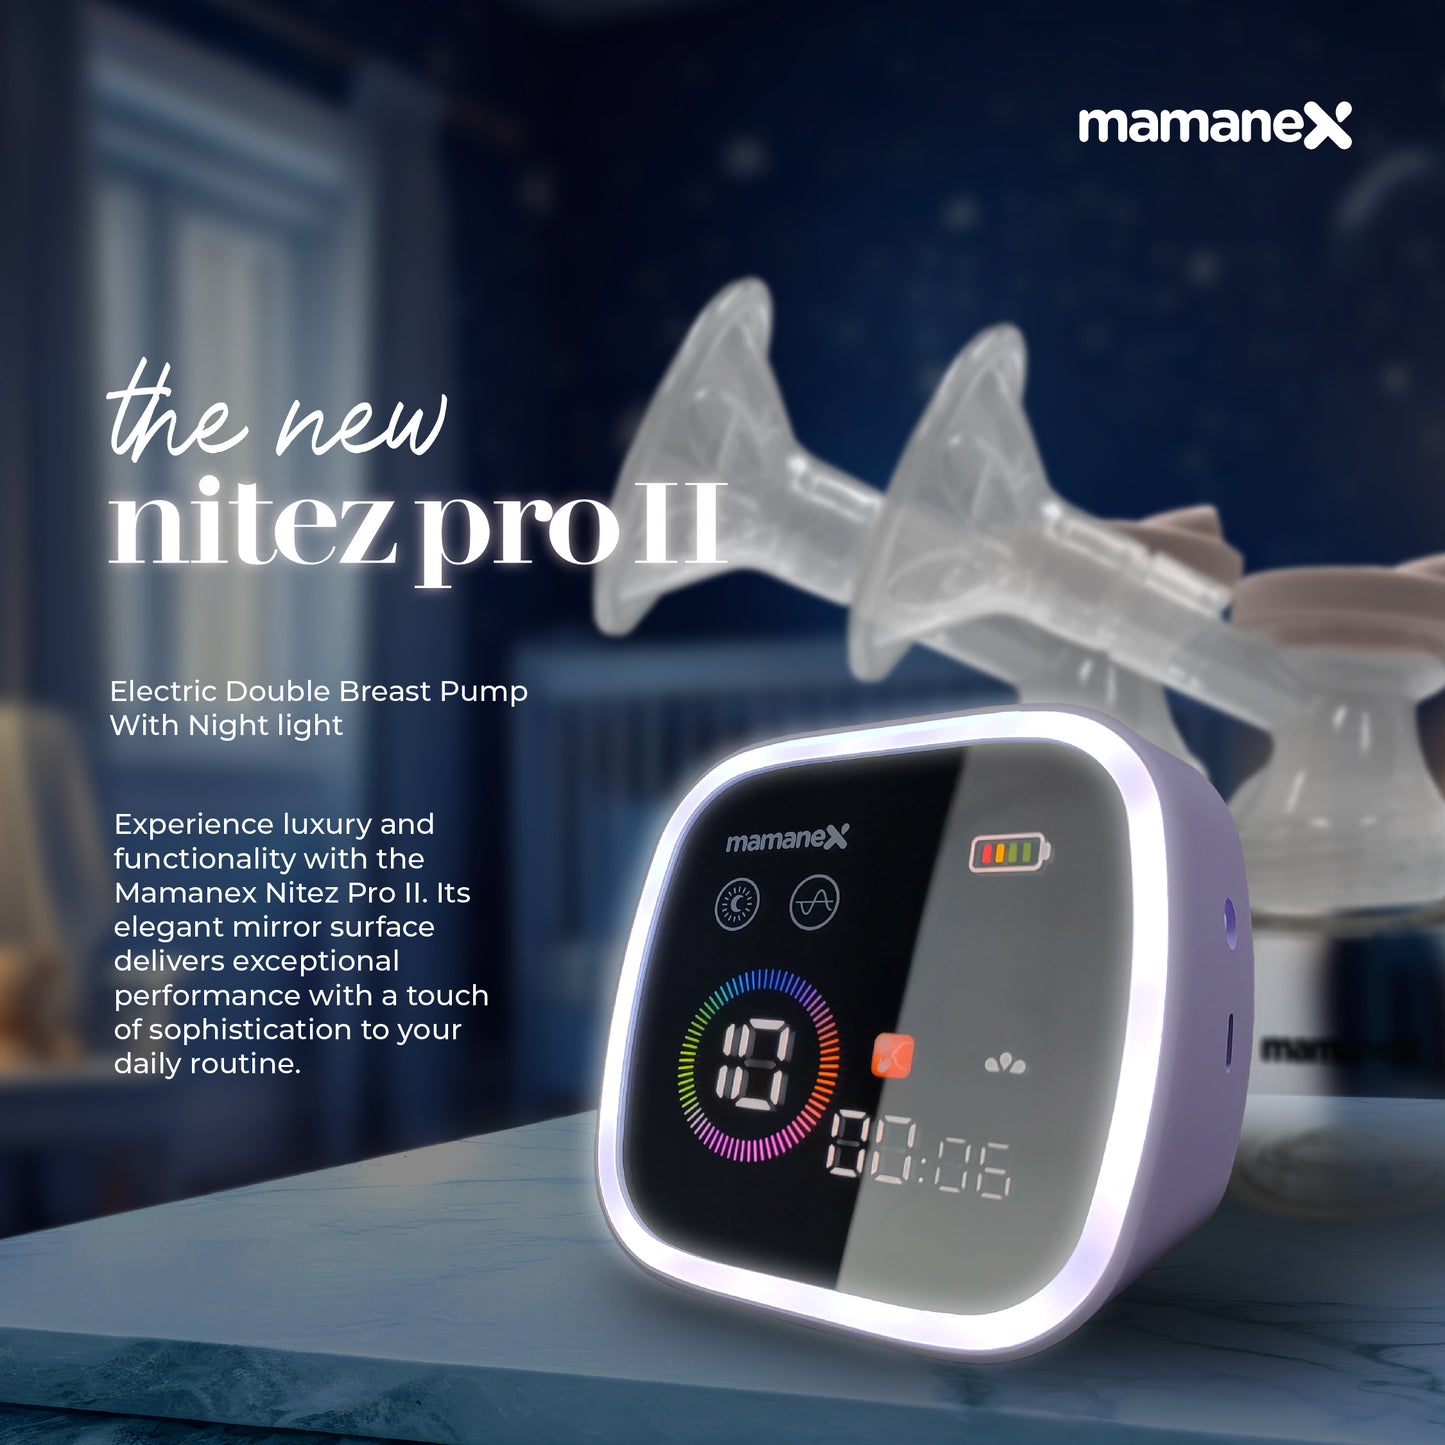 Mamanex Nitez Pro II Double Electric Breast Pump